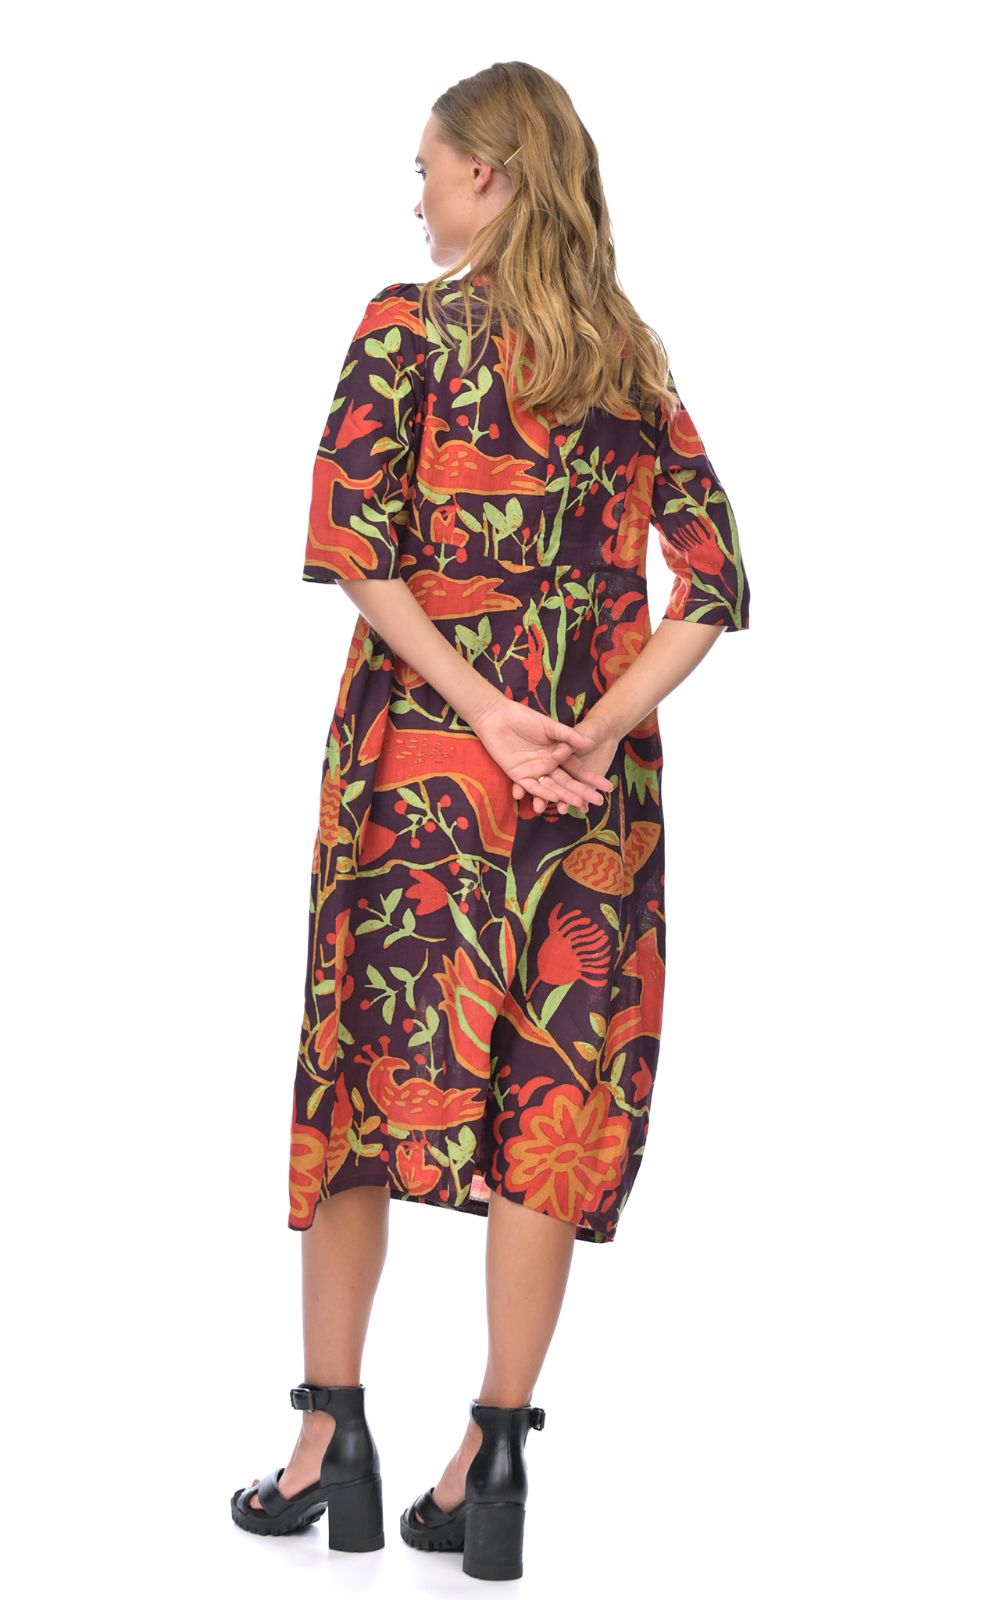 New Holland Linen Romance Dress product photo.